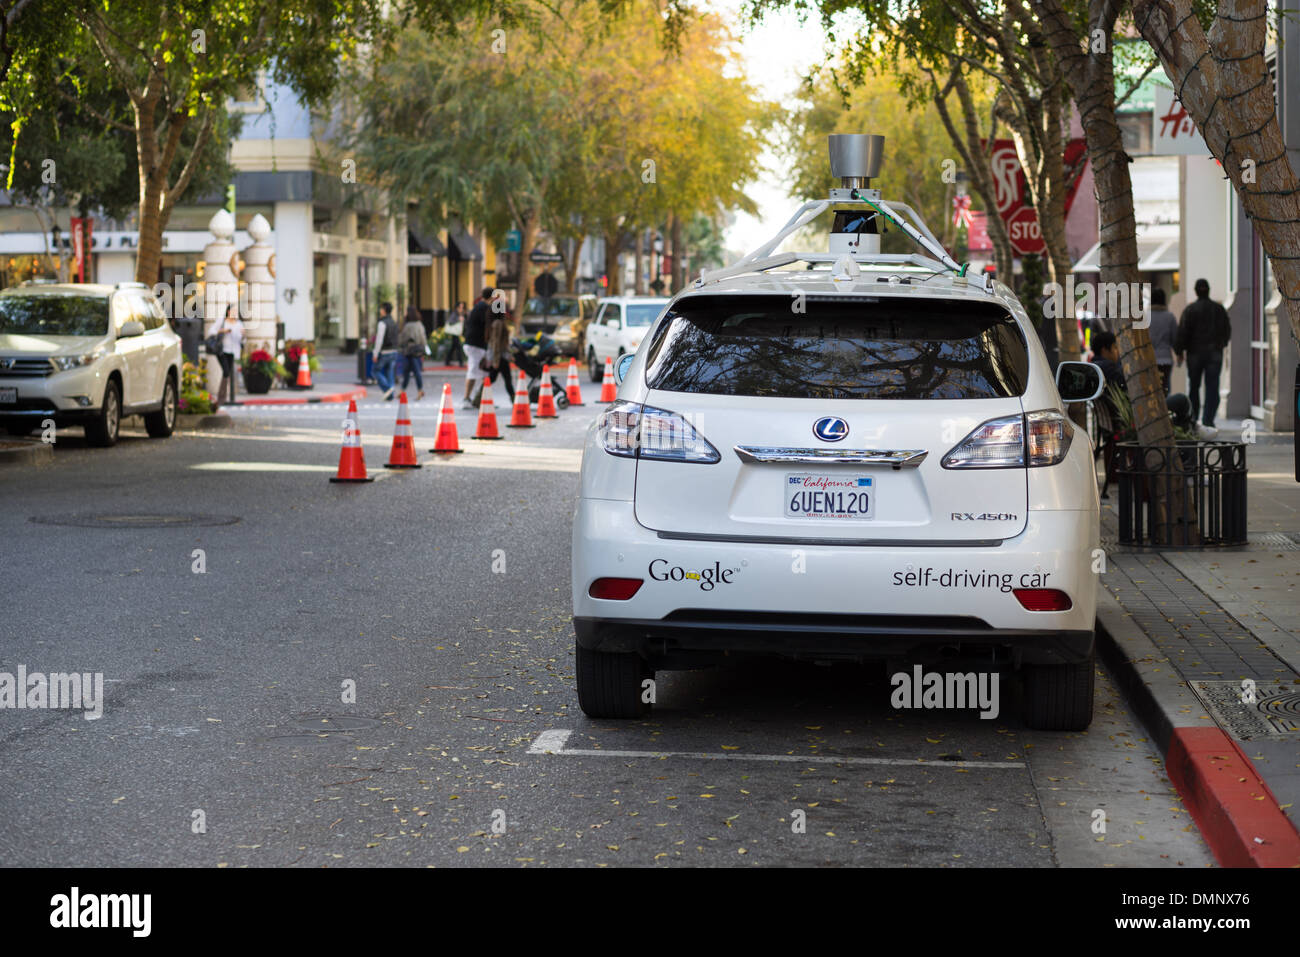 Google self driving car. Stock Photo